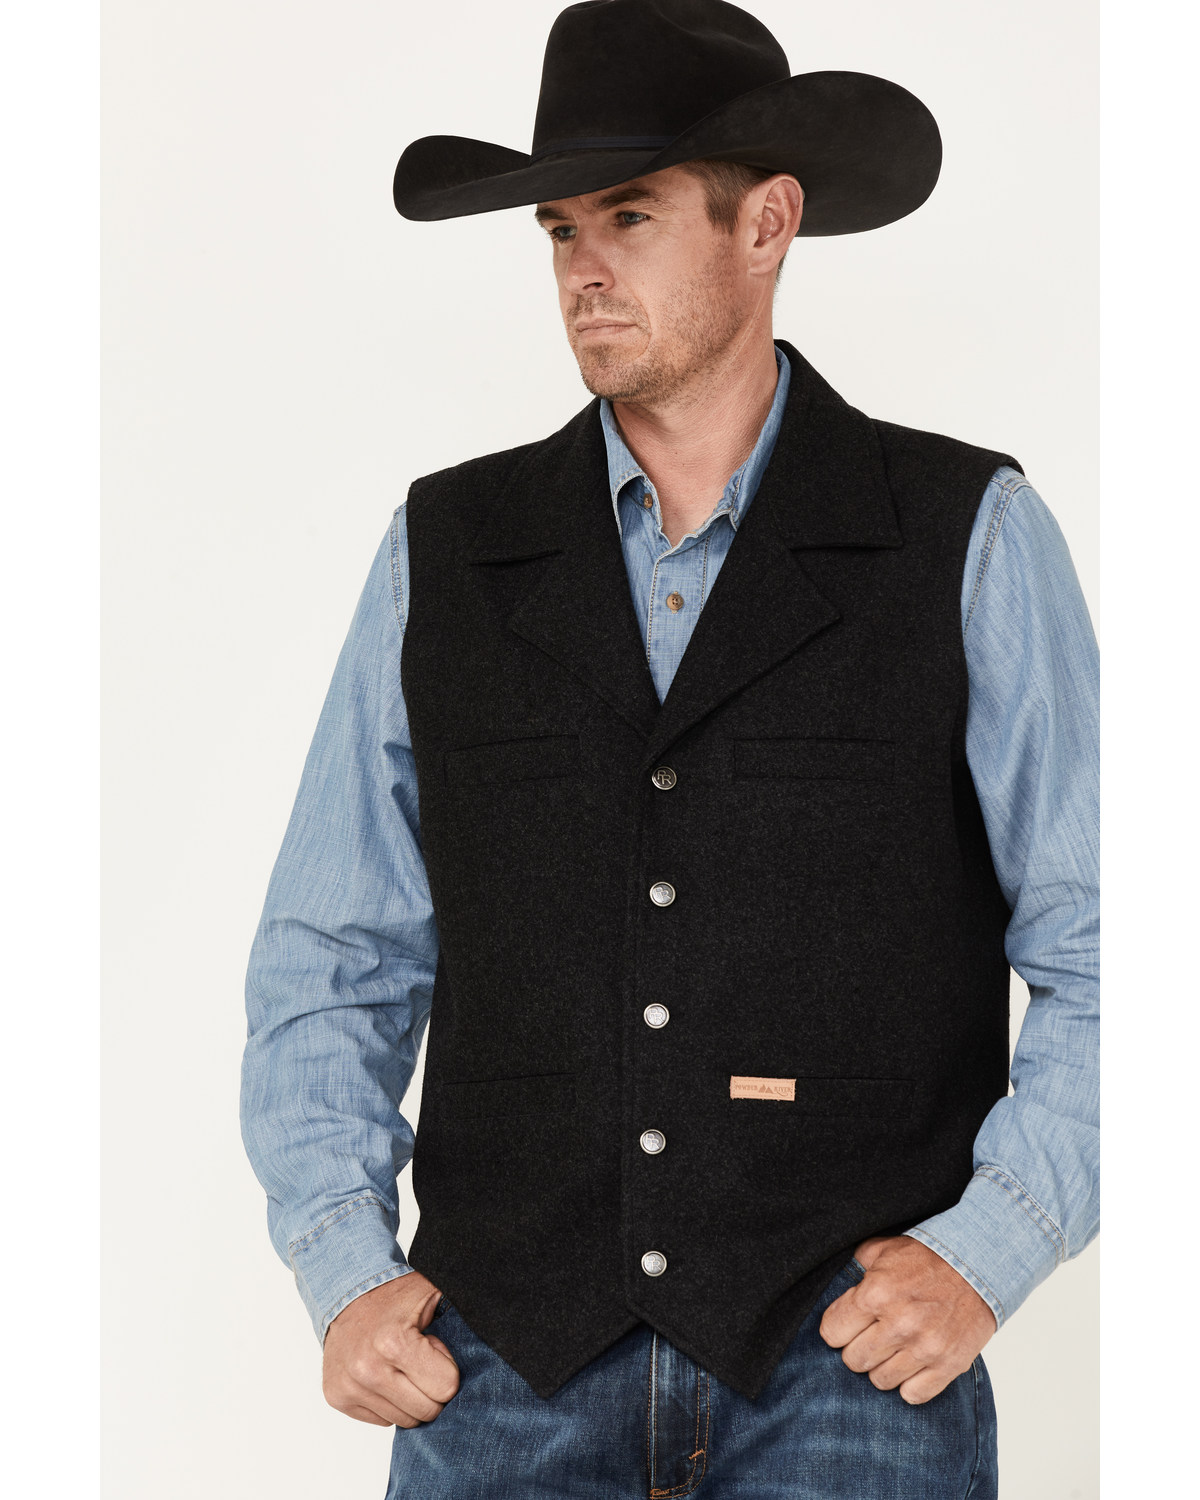 Powder River Outfitters Men's Black Wool Montana Vest